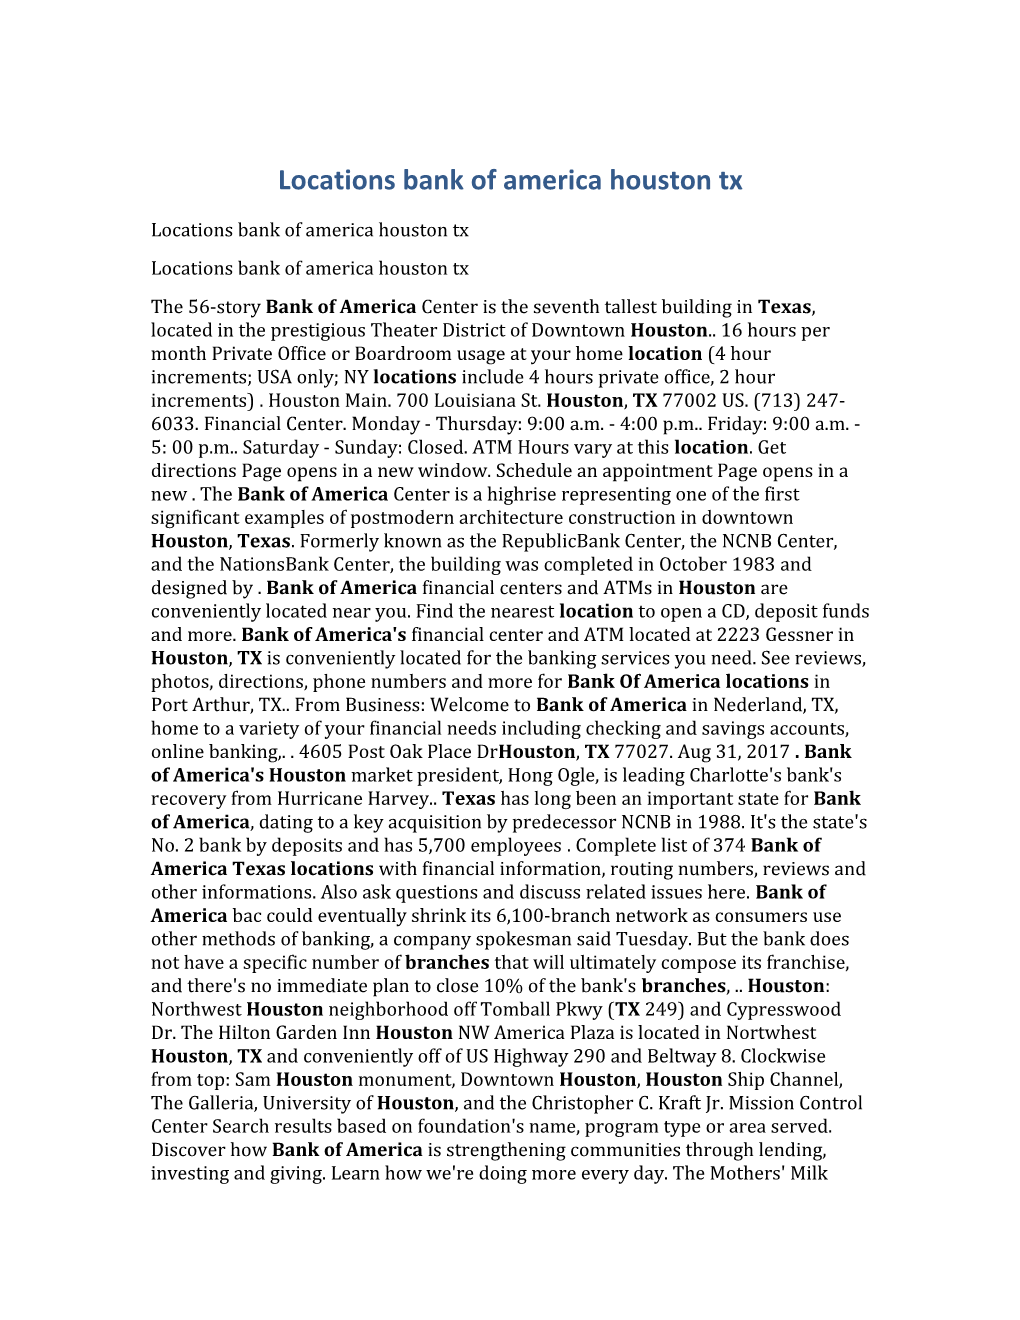 Locations Bank of America Houston Tx